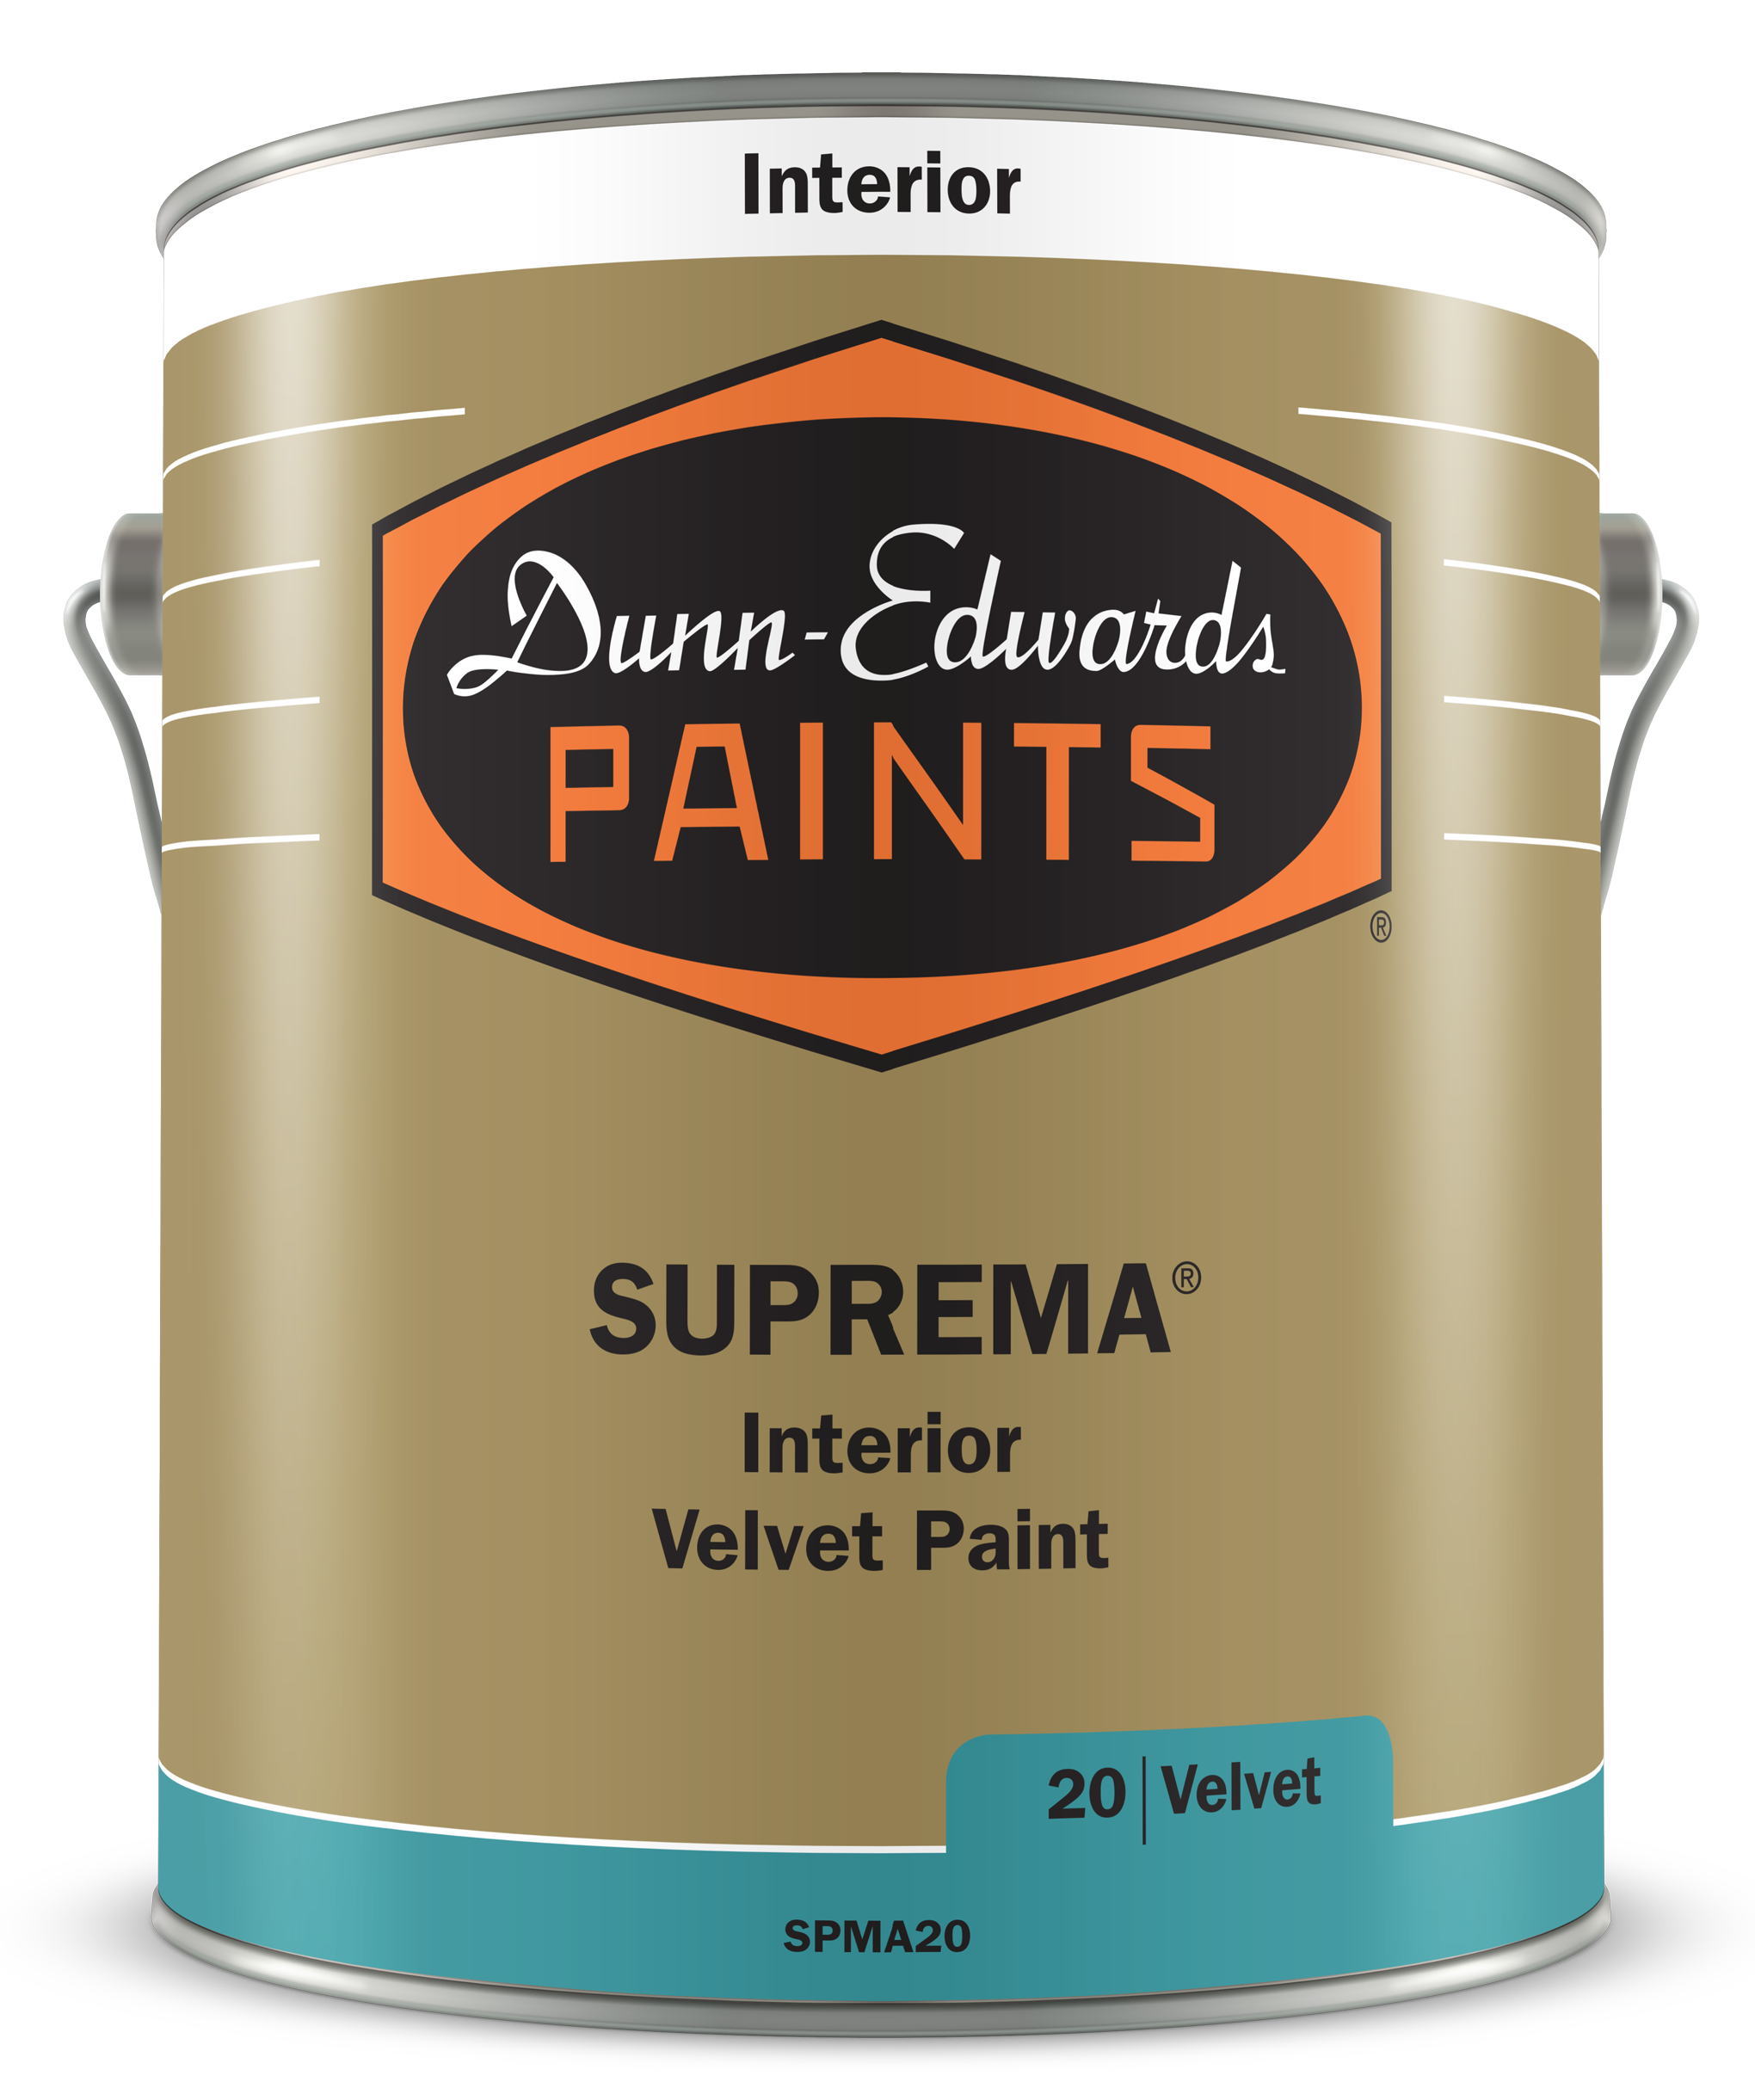 SUPREMA Interior Velvet Paint Can